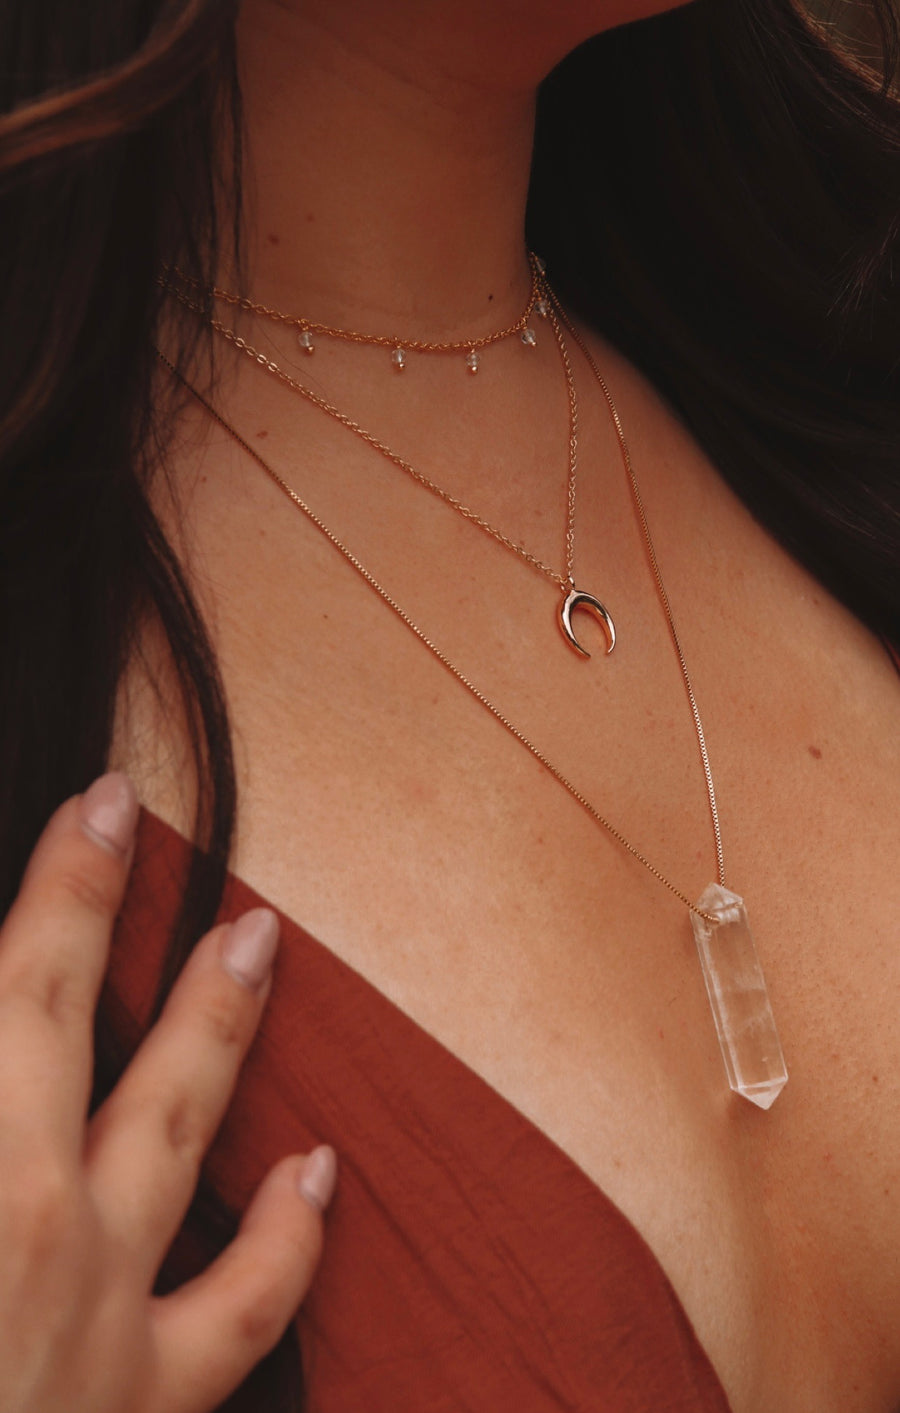 Moonchild | Dainty crescent necklace